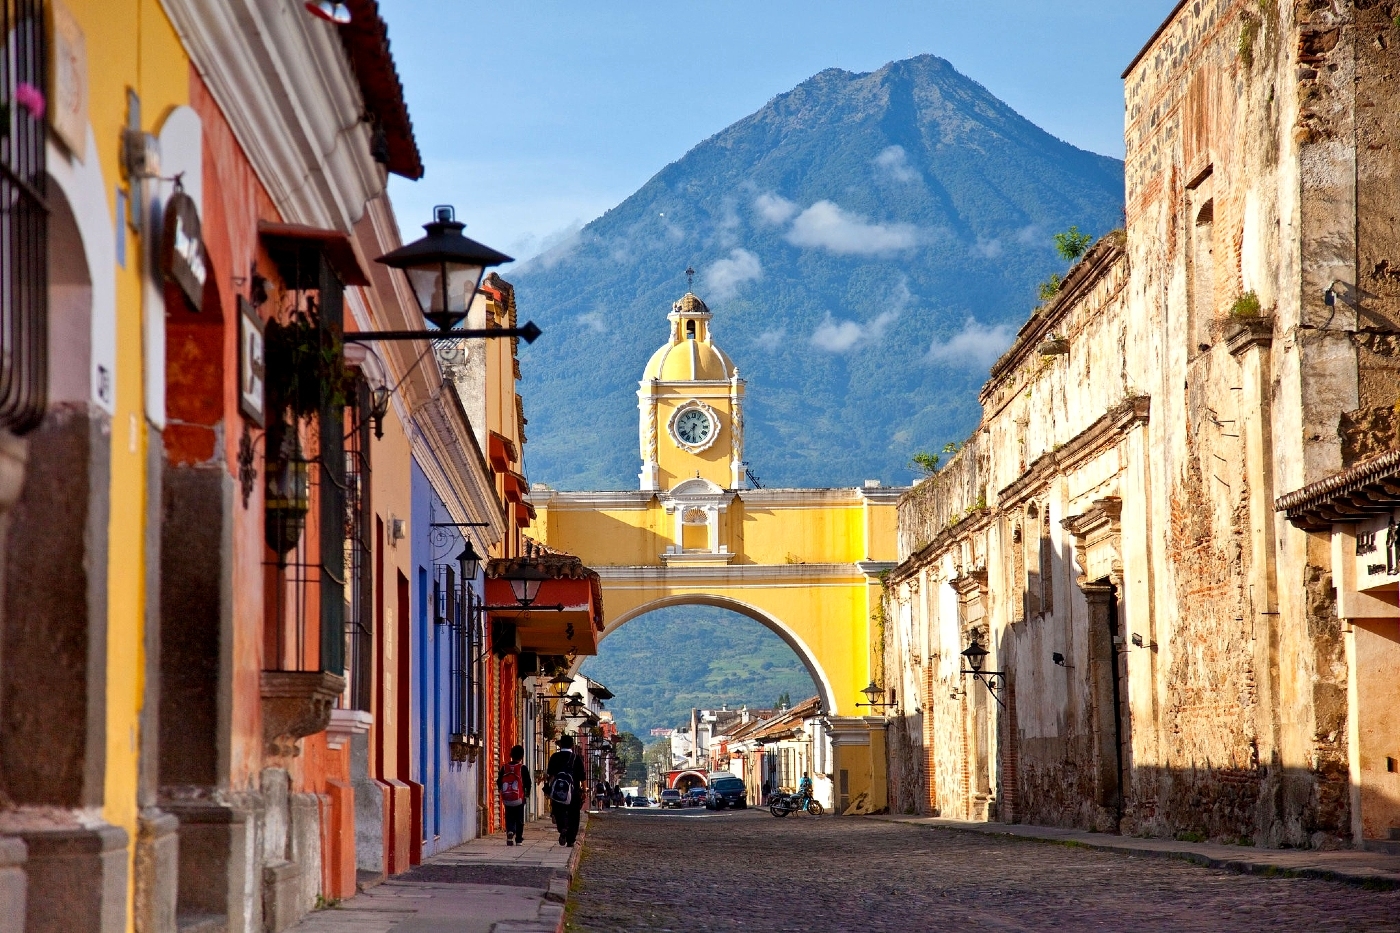 Antigua, Guatelama